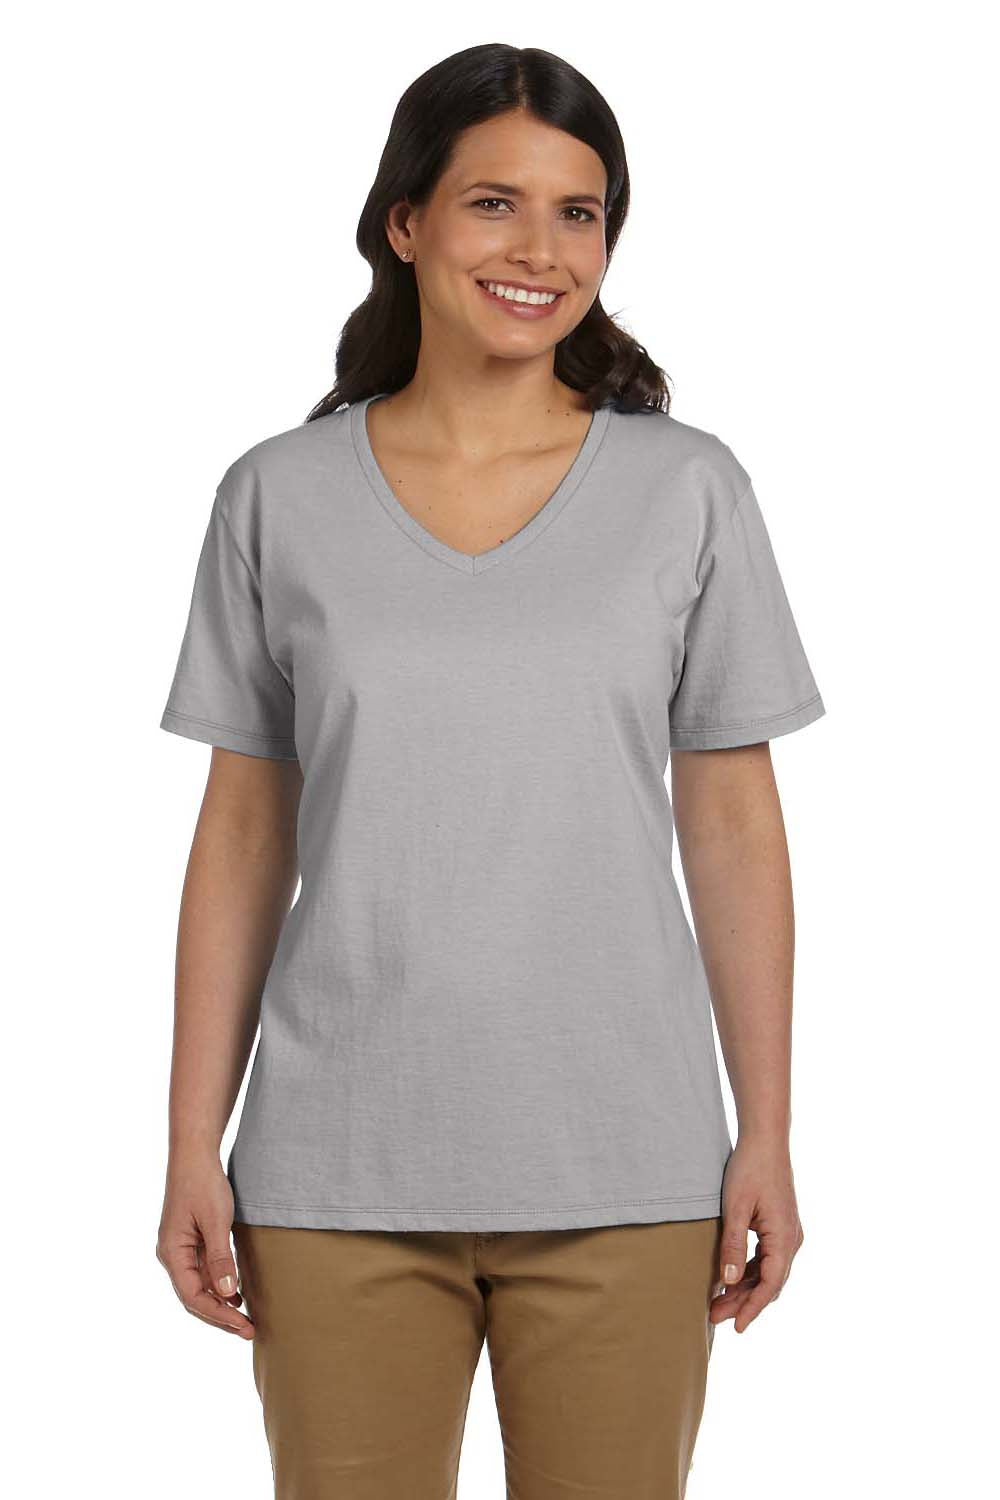 Hanes 5780 Womens ComfortSoft Short Sleeve V-Neck T-Shirt Light Steel Grey Front